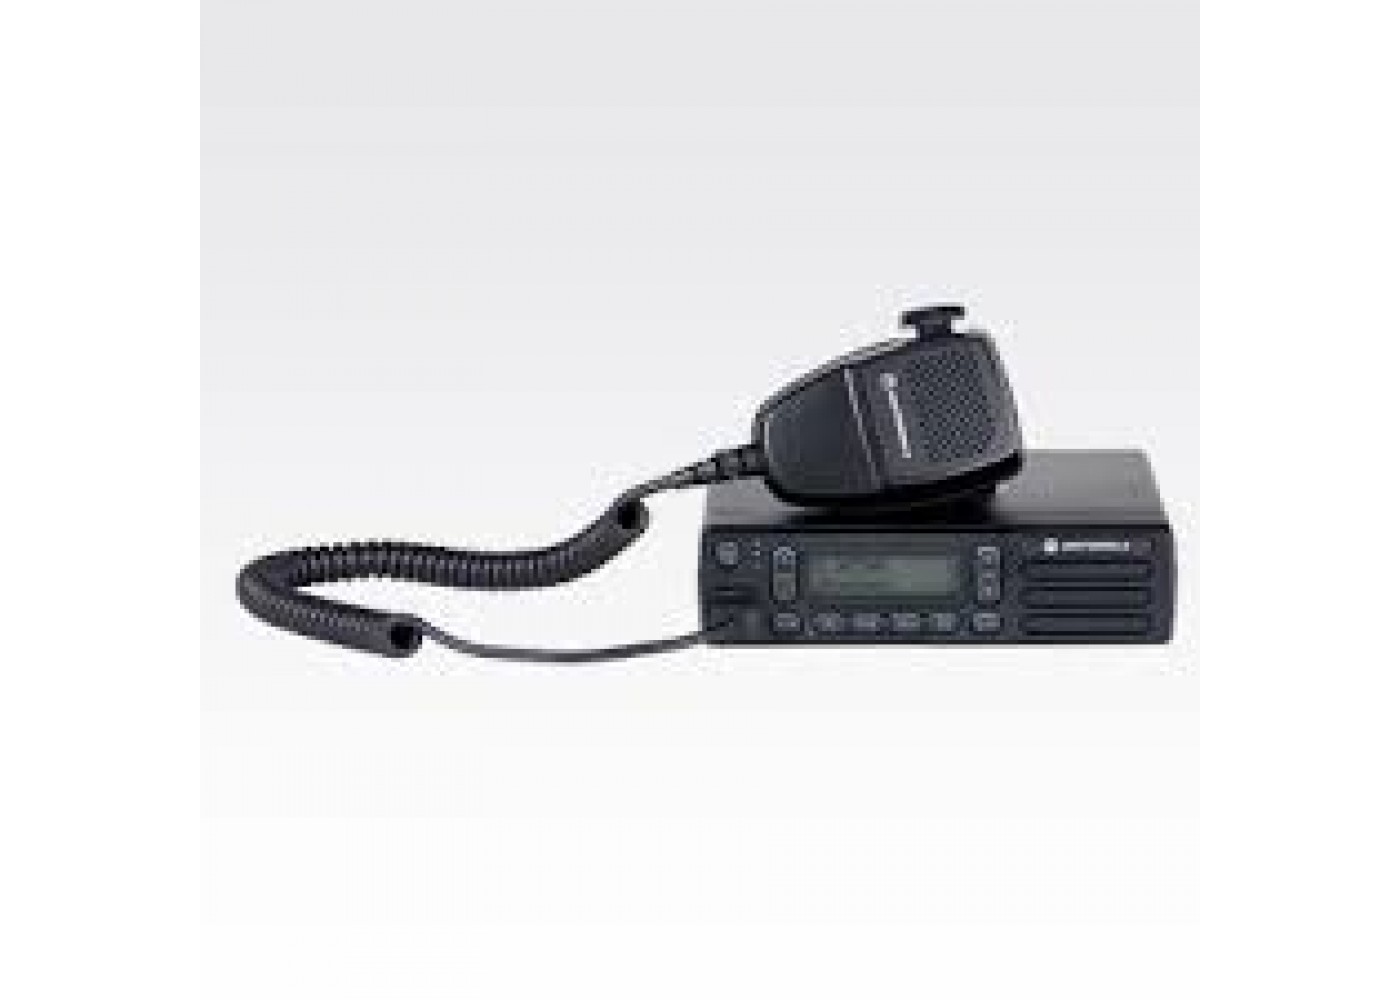 Motorola CM300 VHF 32 Channel Mobile Radio for sale online